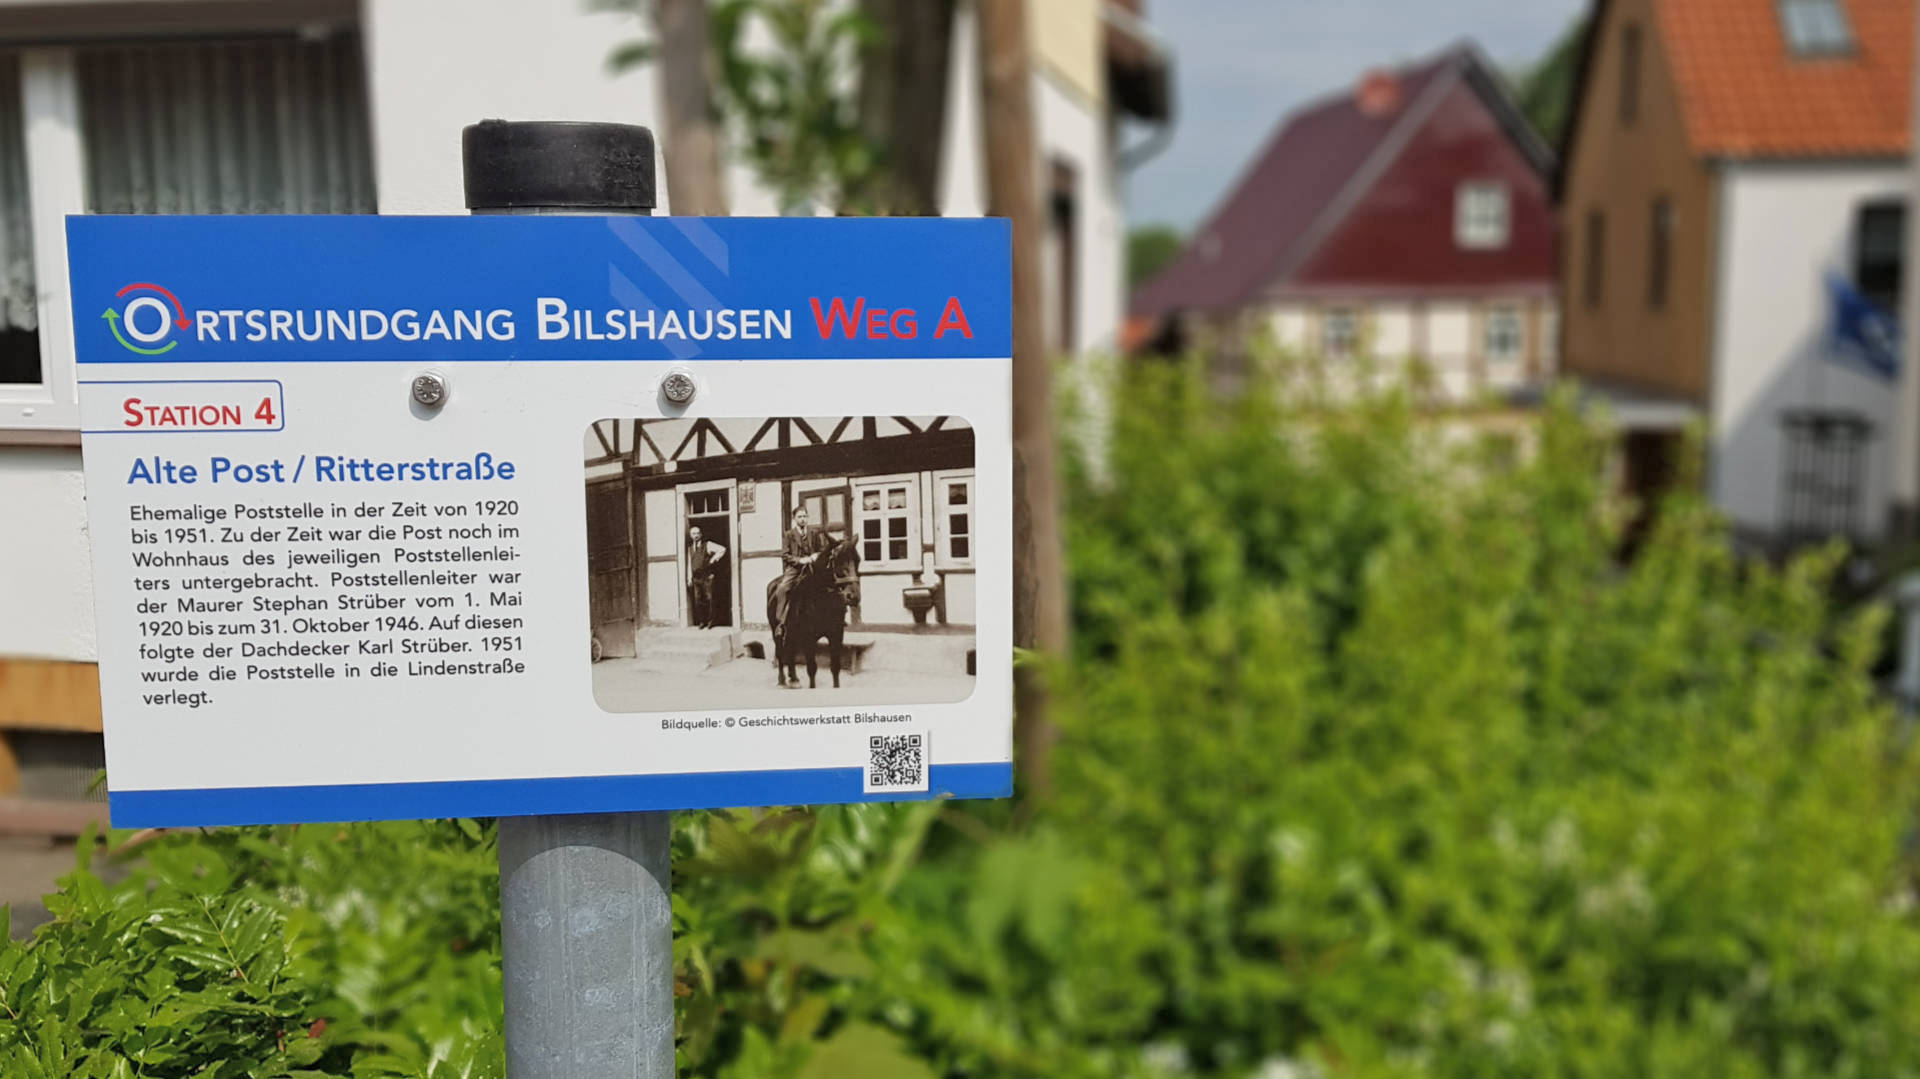 Ortsrundgang Bilshausen - Station 4